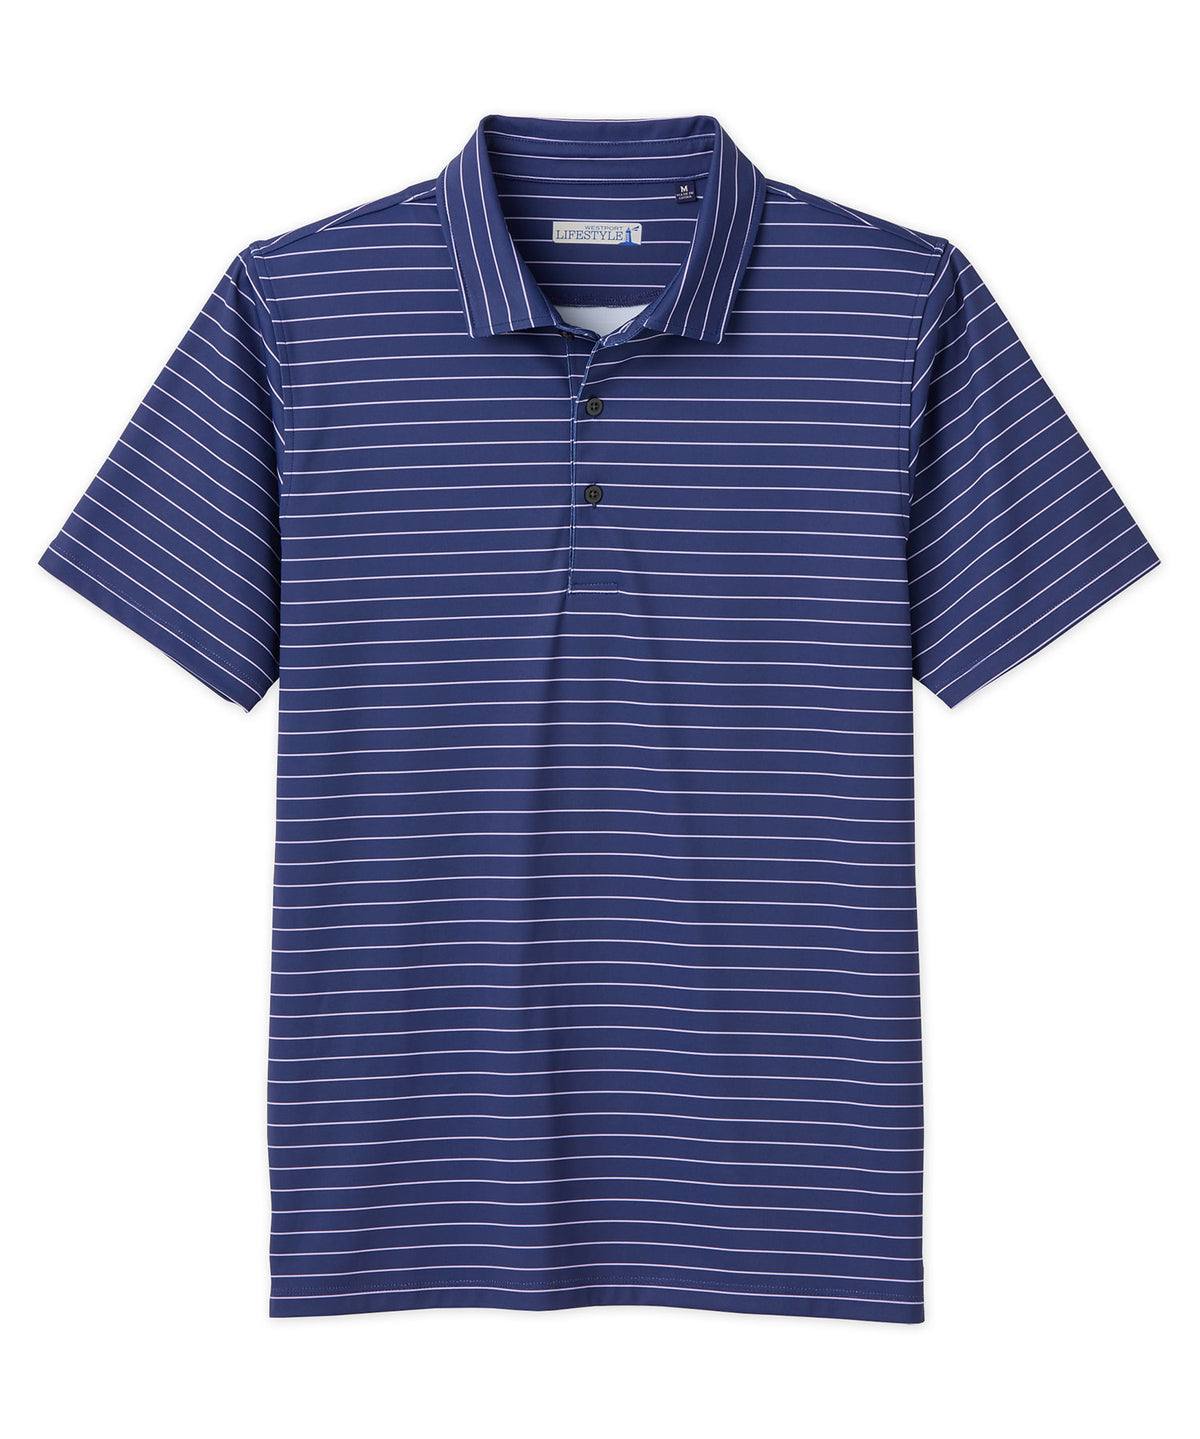 Westport Lifestyle Short Sleeve Performance Stripe Polo Shirt, Men's Big & Tall